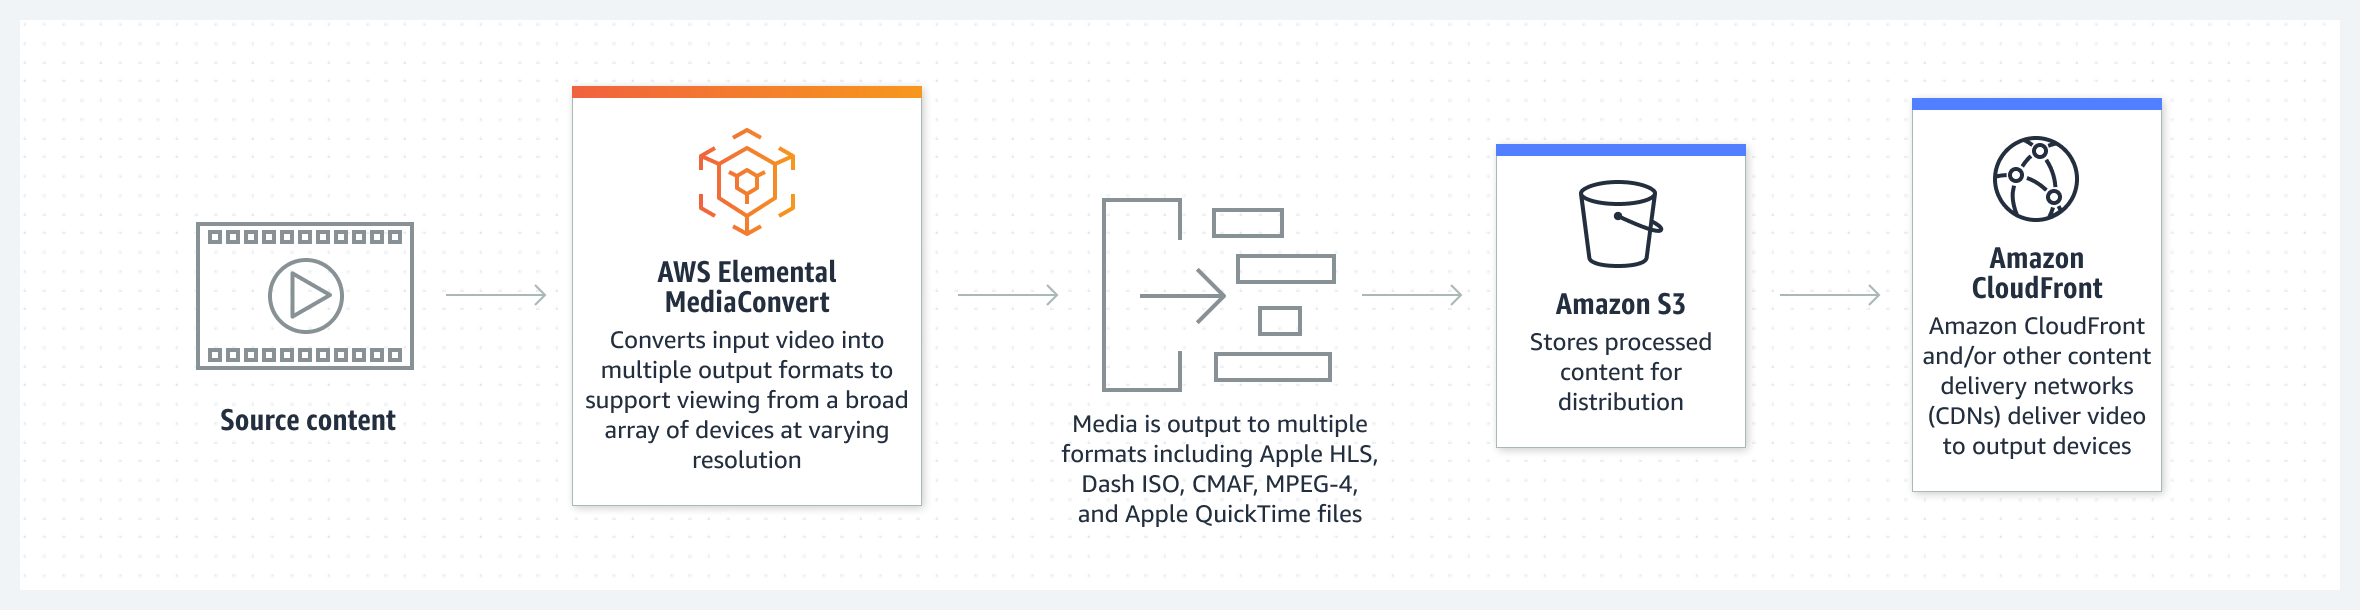 Diagram yang menunjukkan cara AWS Elemental MediaConvert mengonversi video masukan ke berbagai format keluaran.